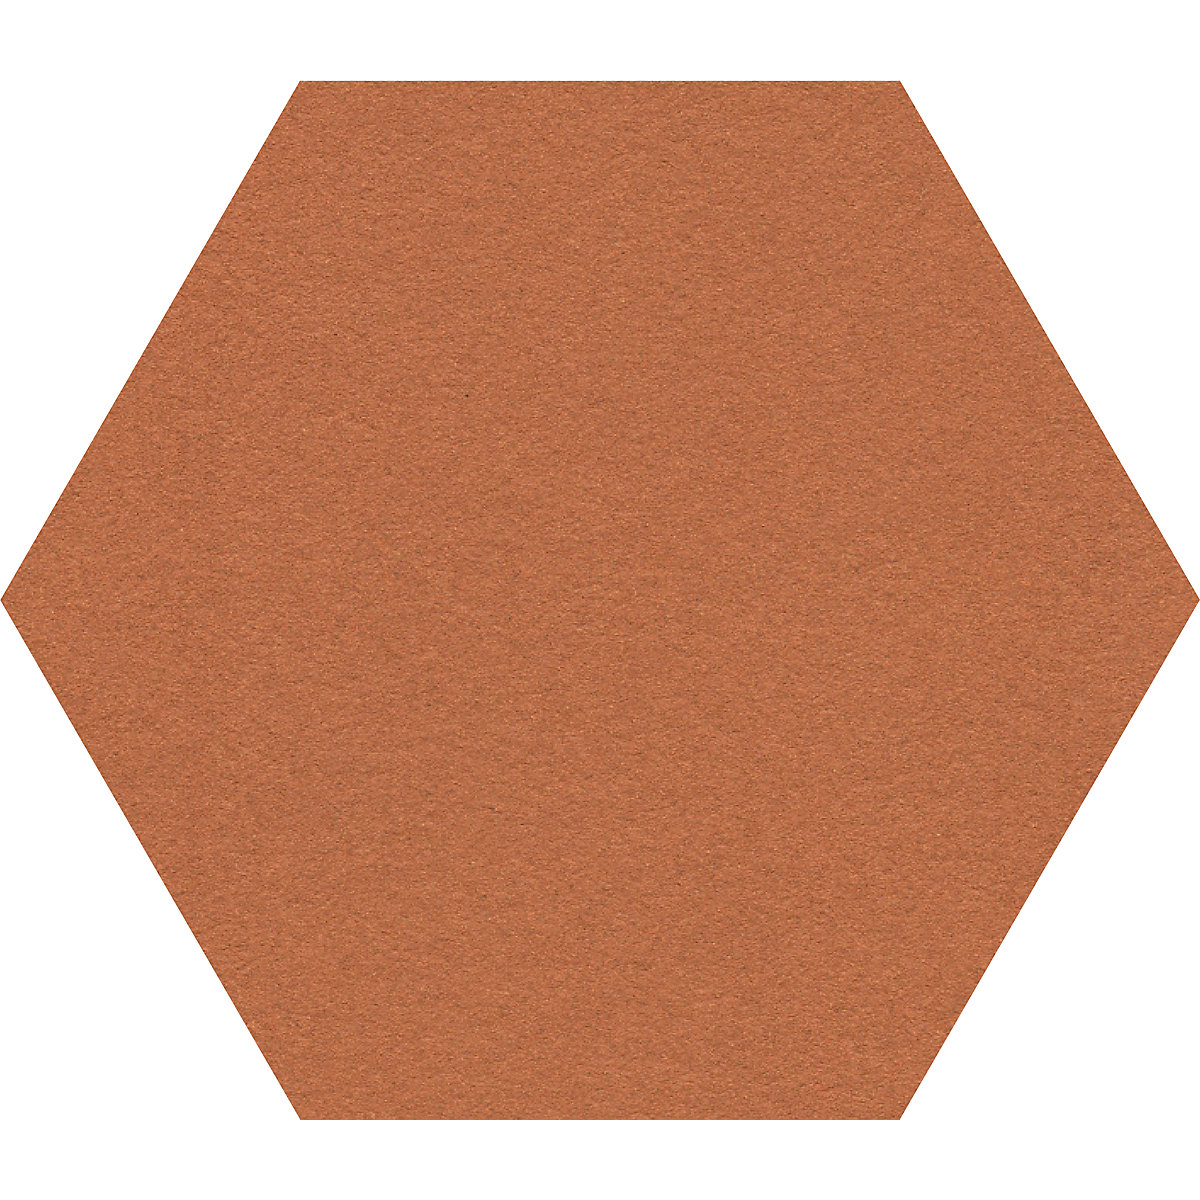 Hexagonal designer pin board – Chameleon, cork, WxH 600 x 600 mm, cognac-27